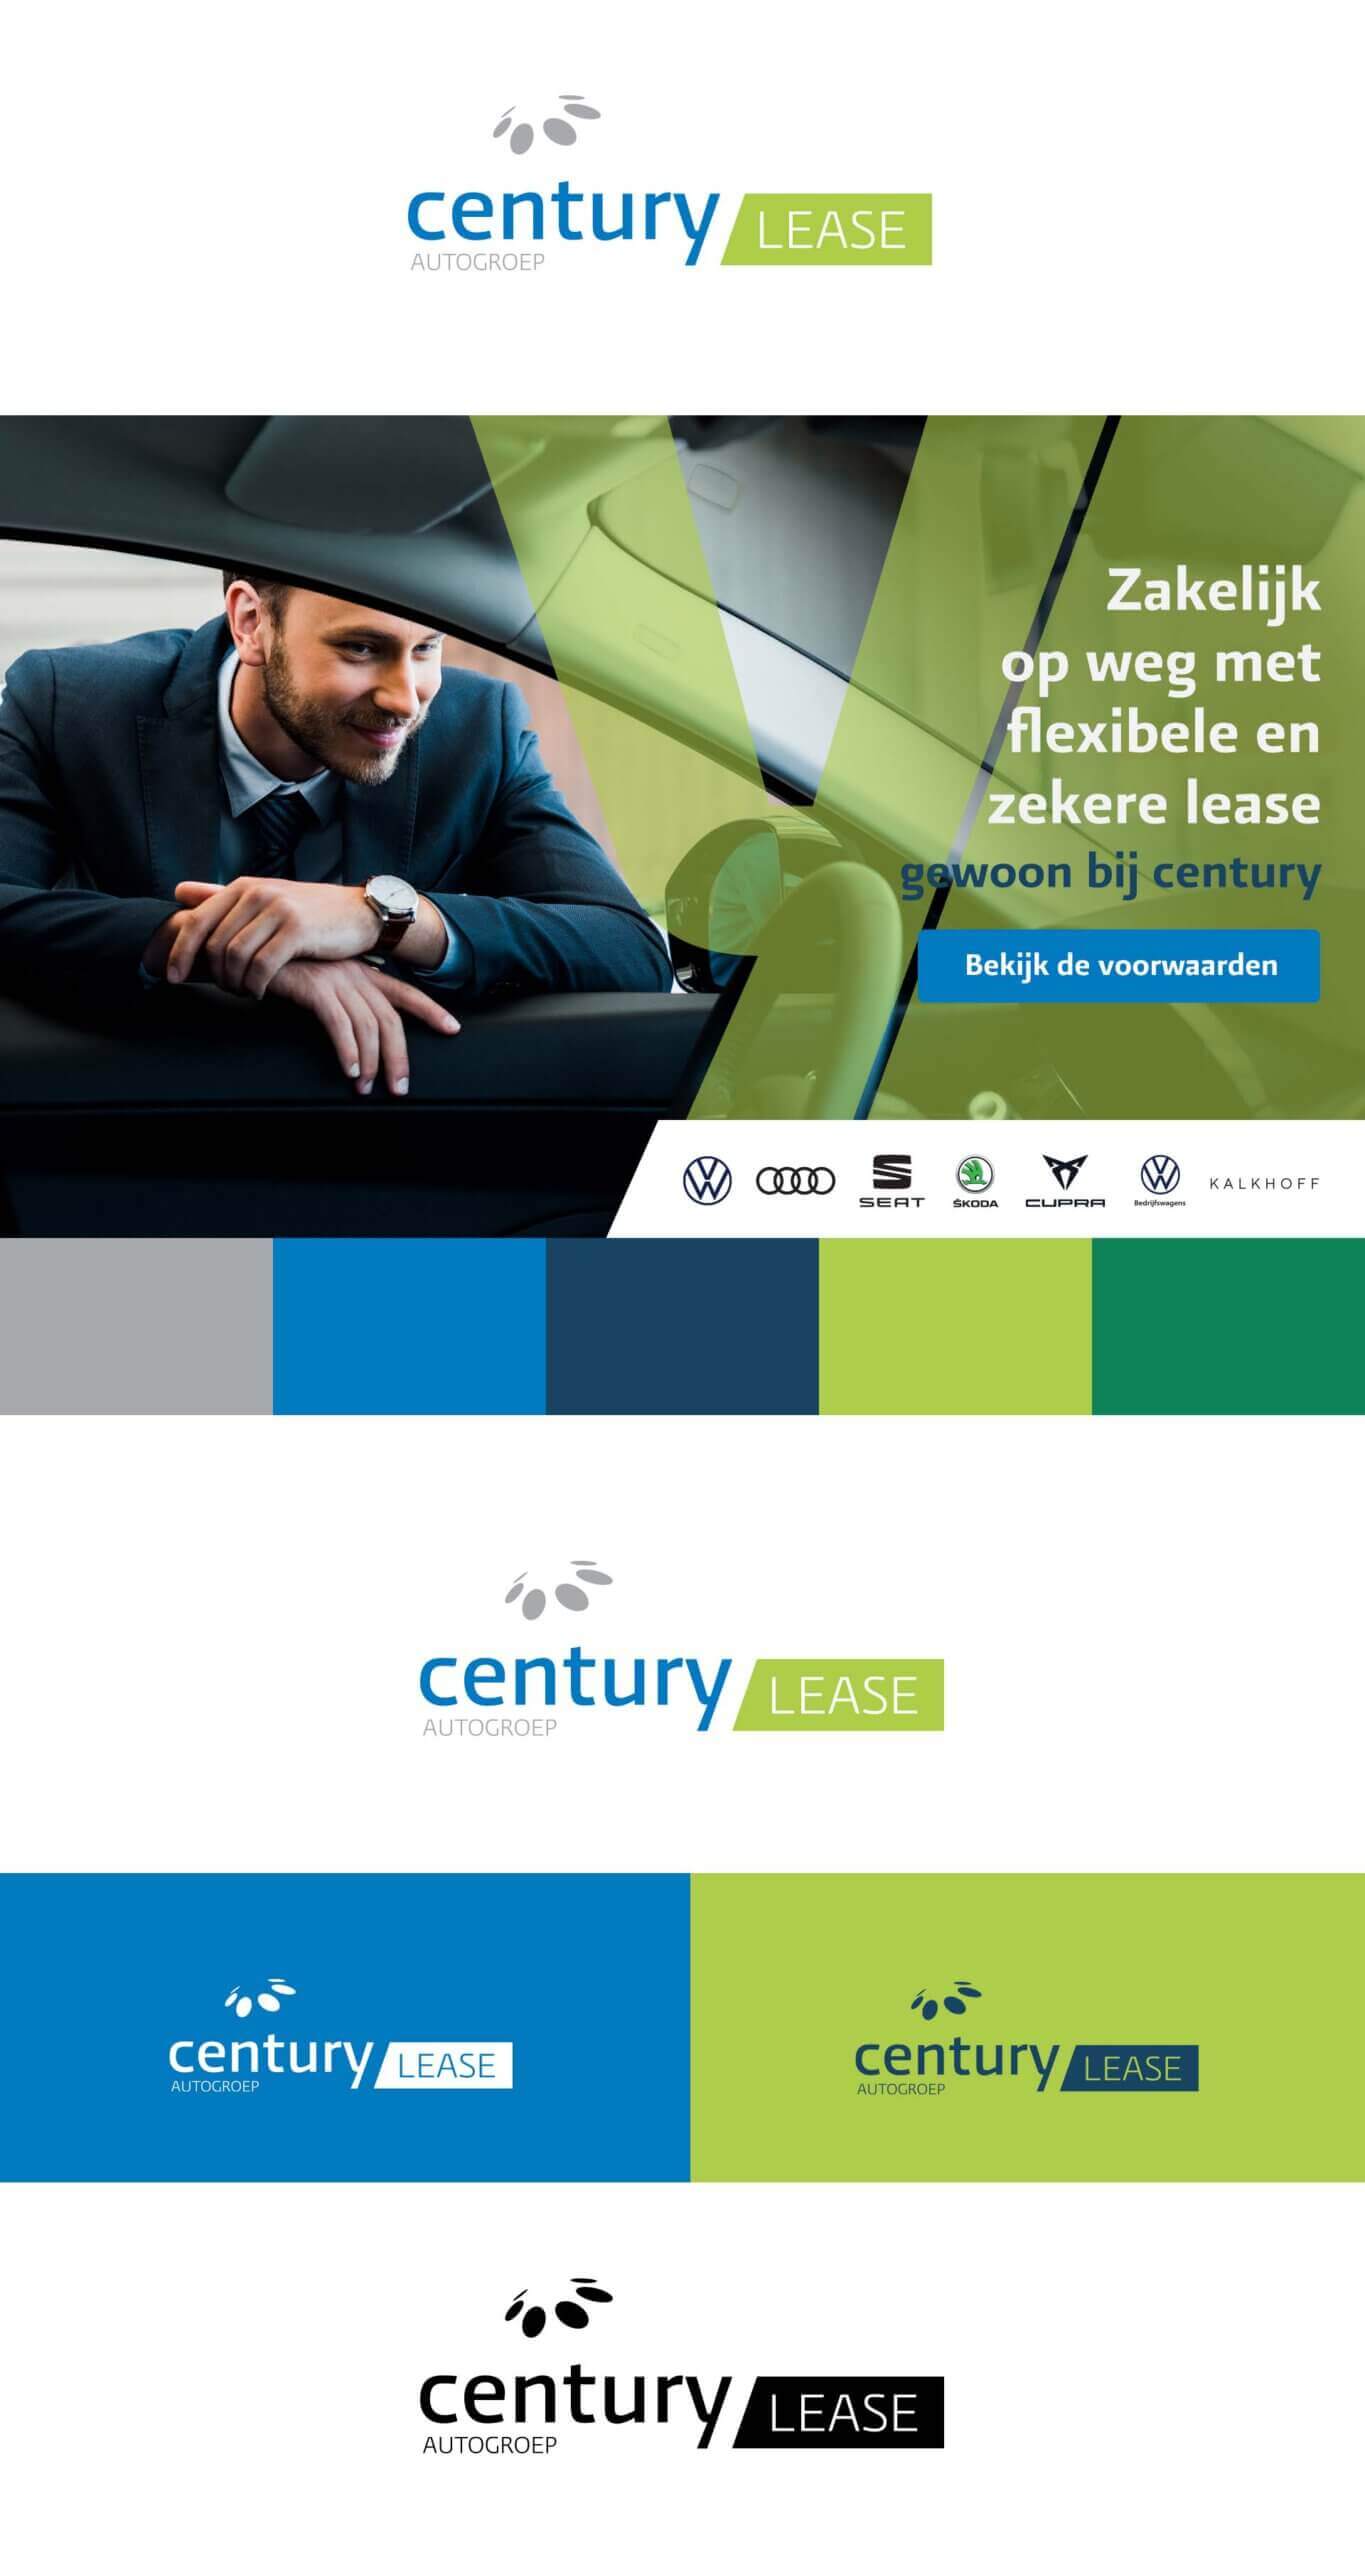 century logo presentatie lease